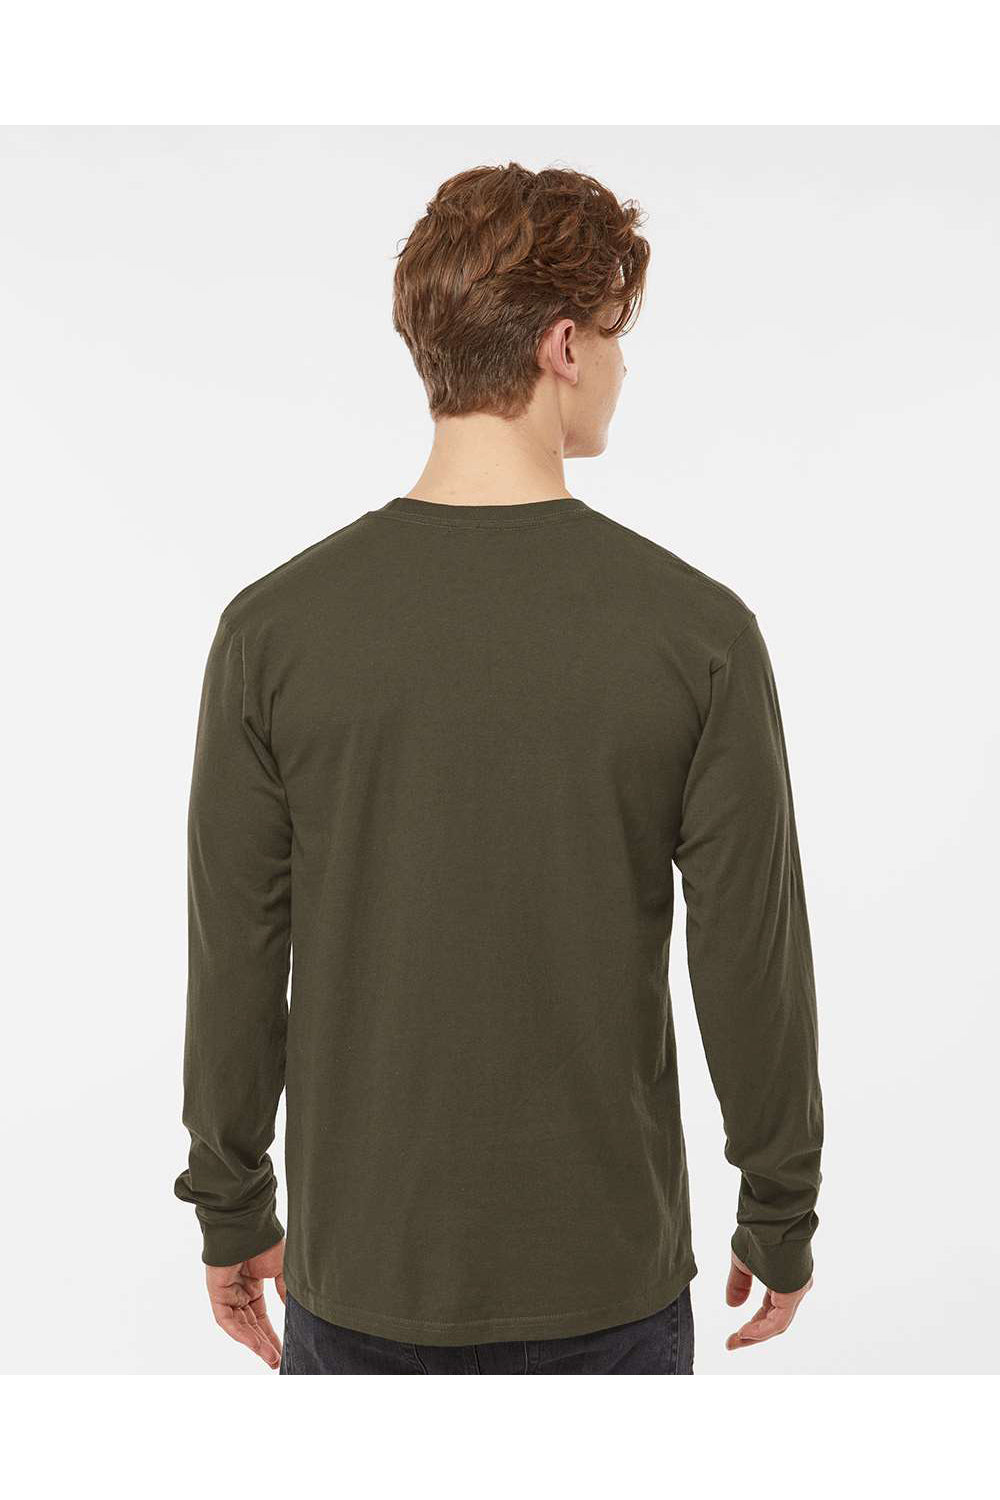 Tultex 291 Mens Jersey Long Sleeve Crewneck T-Shirt Grape Leaf Green Model Back